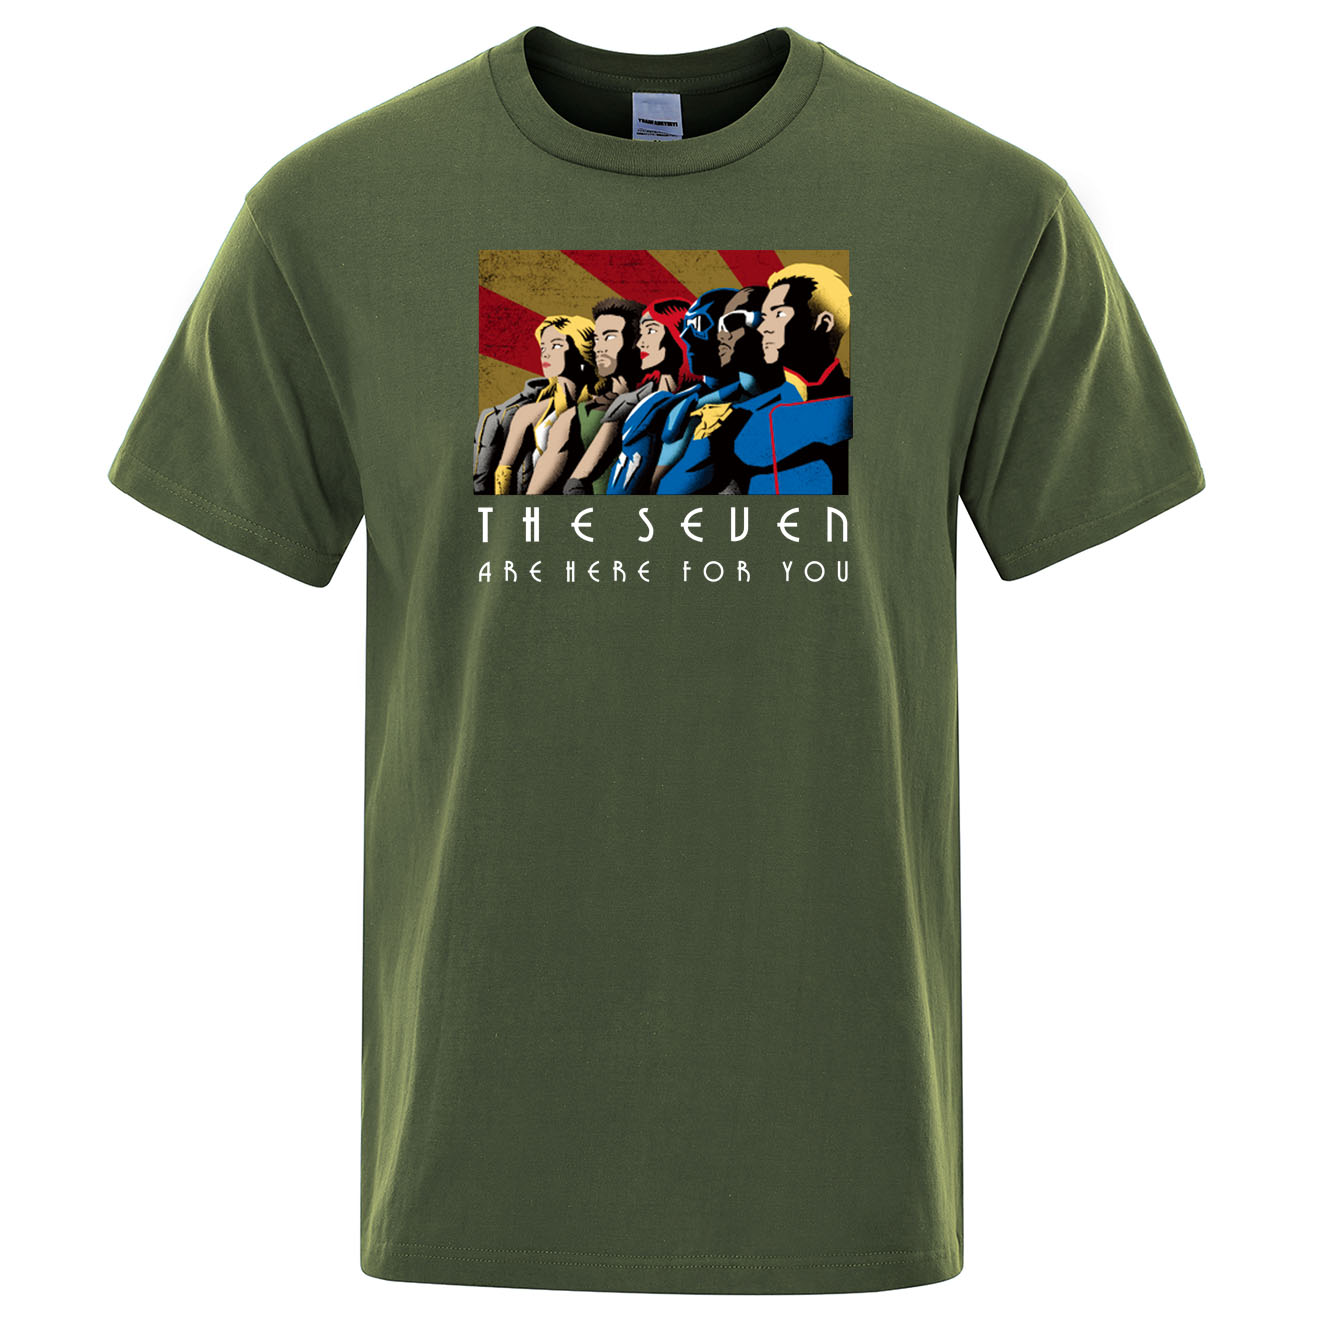 The Boys The Seven T-Shirt Funny Superhero Print T Shirt 2019 Summer High Quality Cotton Tops Casual Hip Hop Mens Tee Shirt